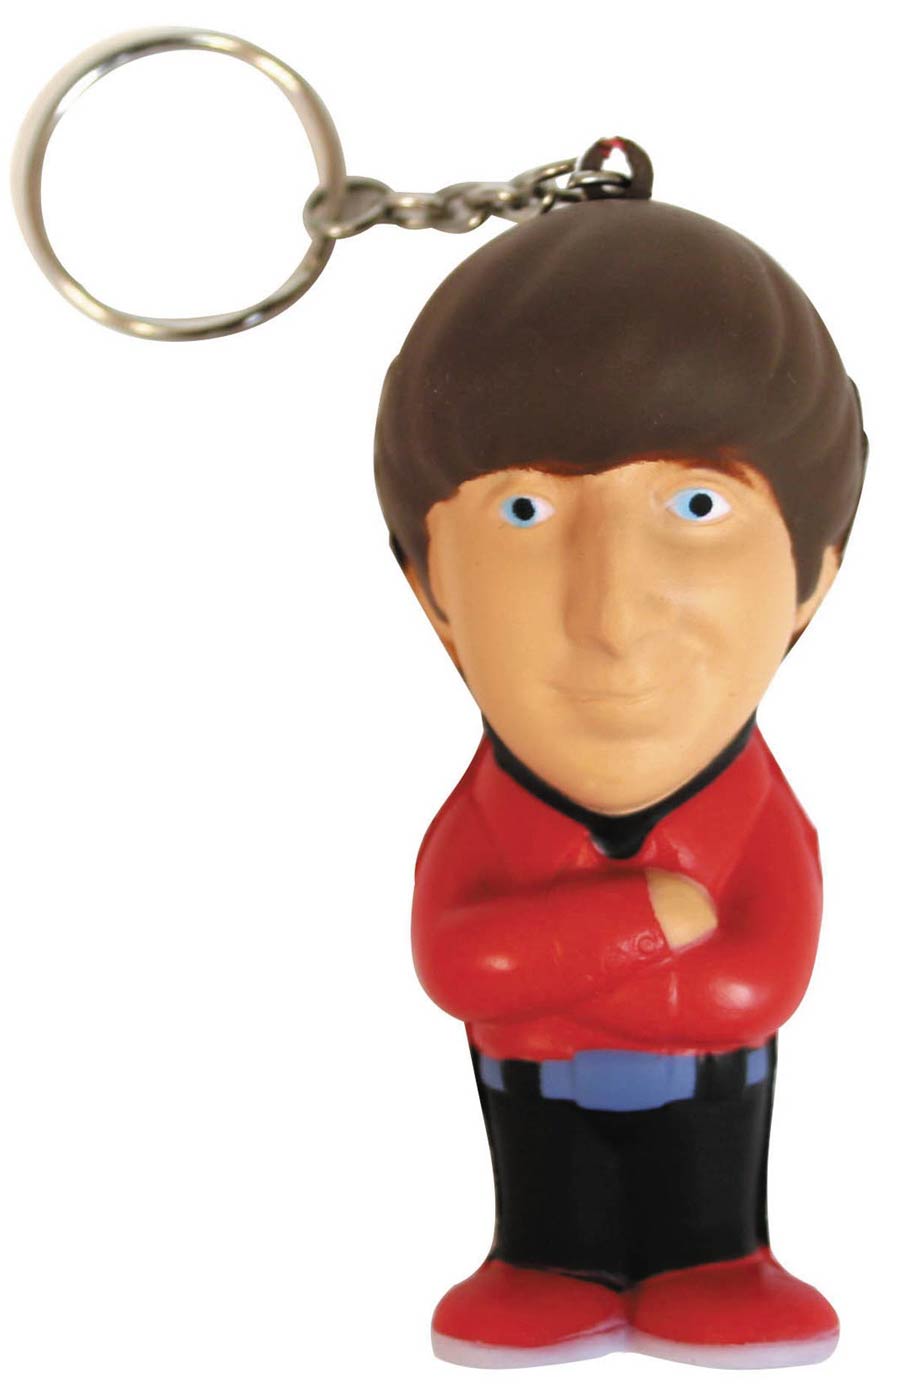 Big Bang Theory 3-Inch Stress Doll Keychain - Howard